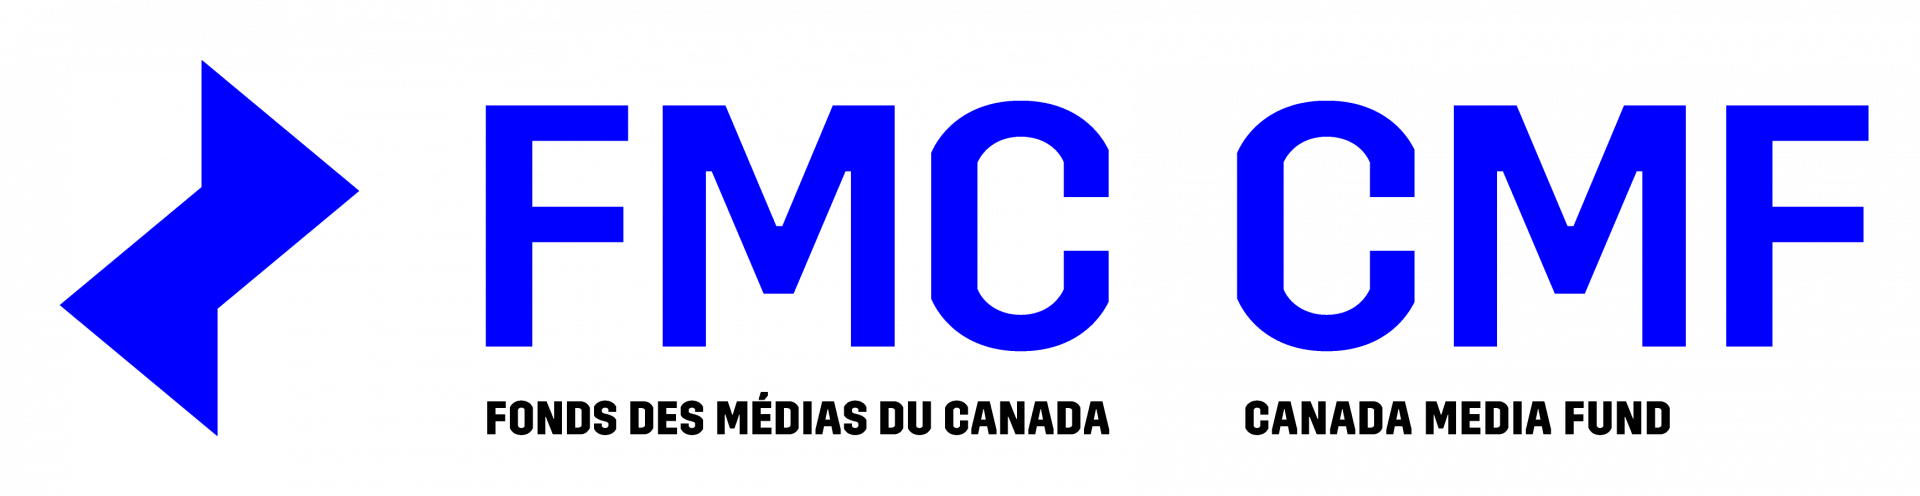 CMF-Logo-Sponsorship-BIL-F-2C-Horiz-Blue P2935+Black-POS-RGB